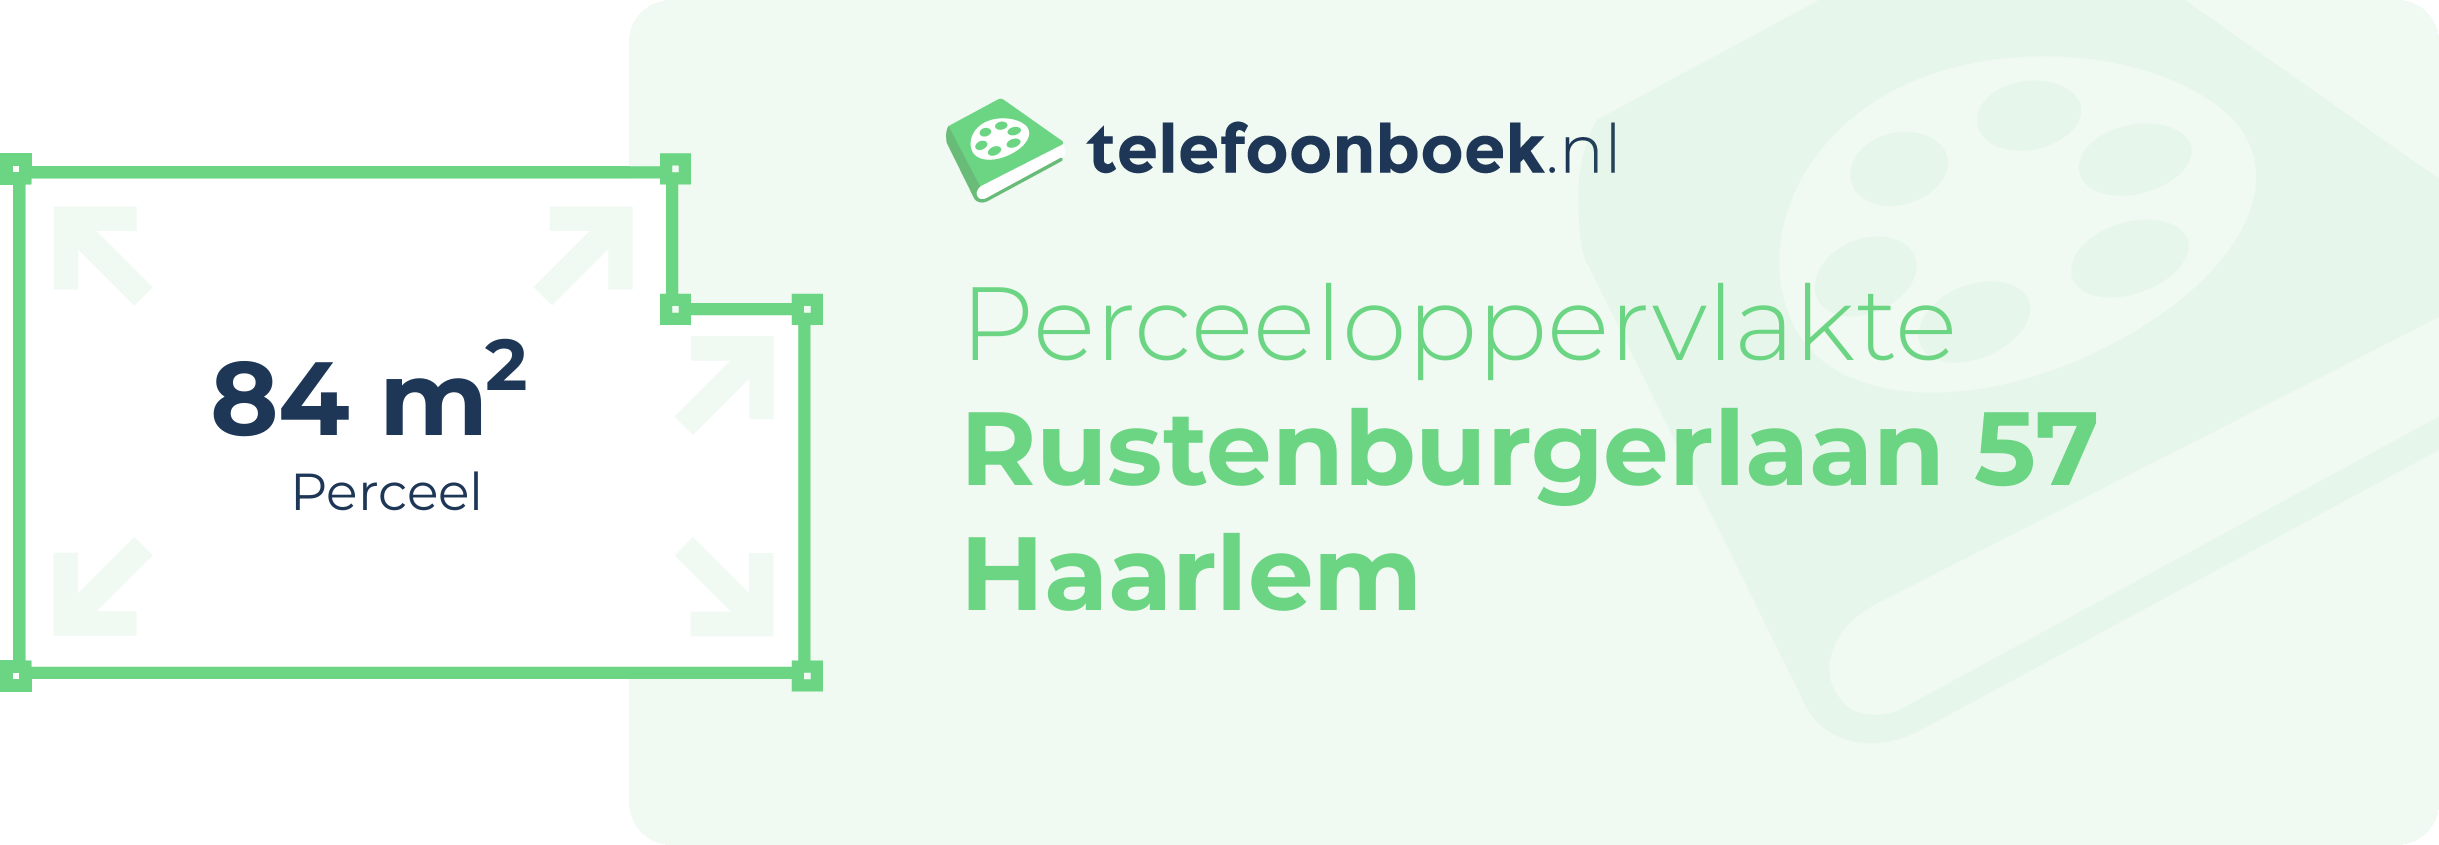 Perceeloppervlakte Rustenburgerlaan 57 Haarlem